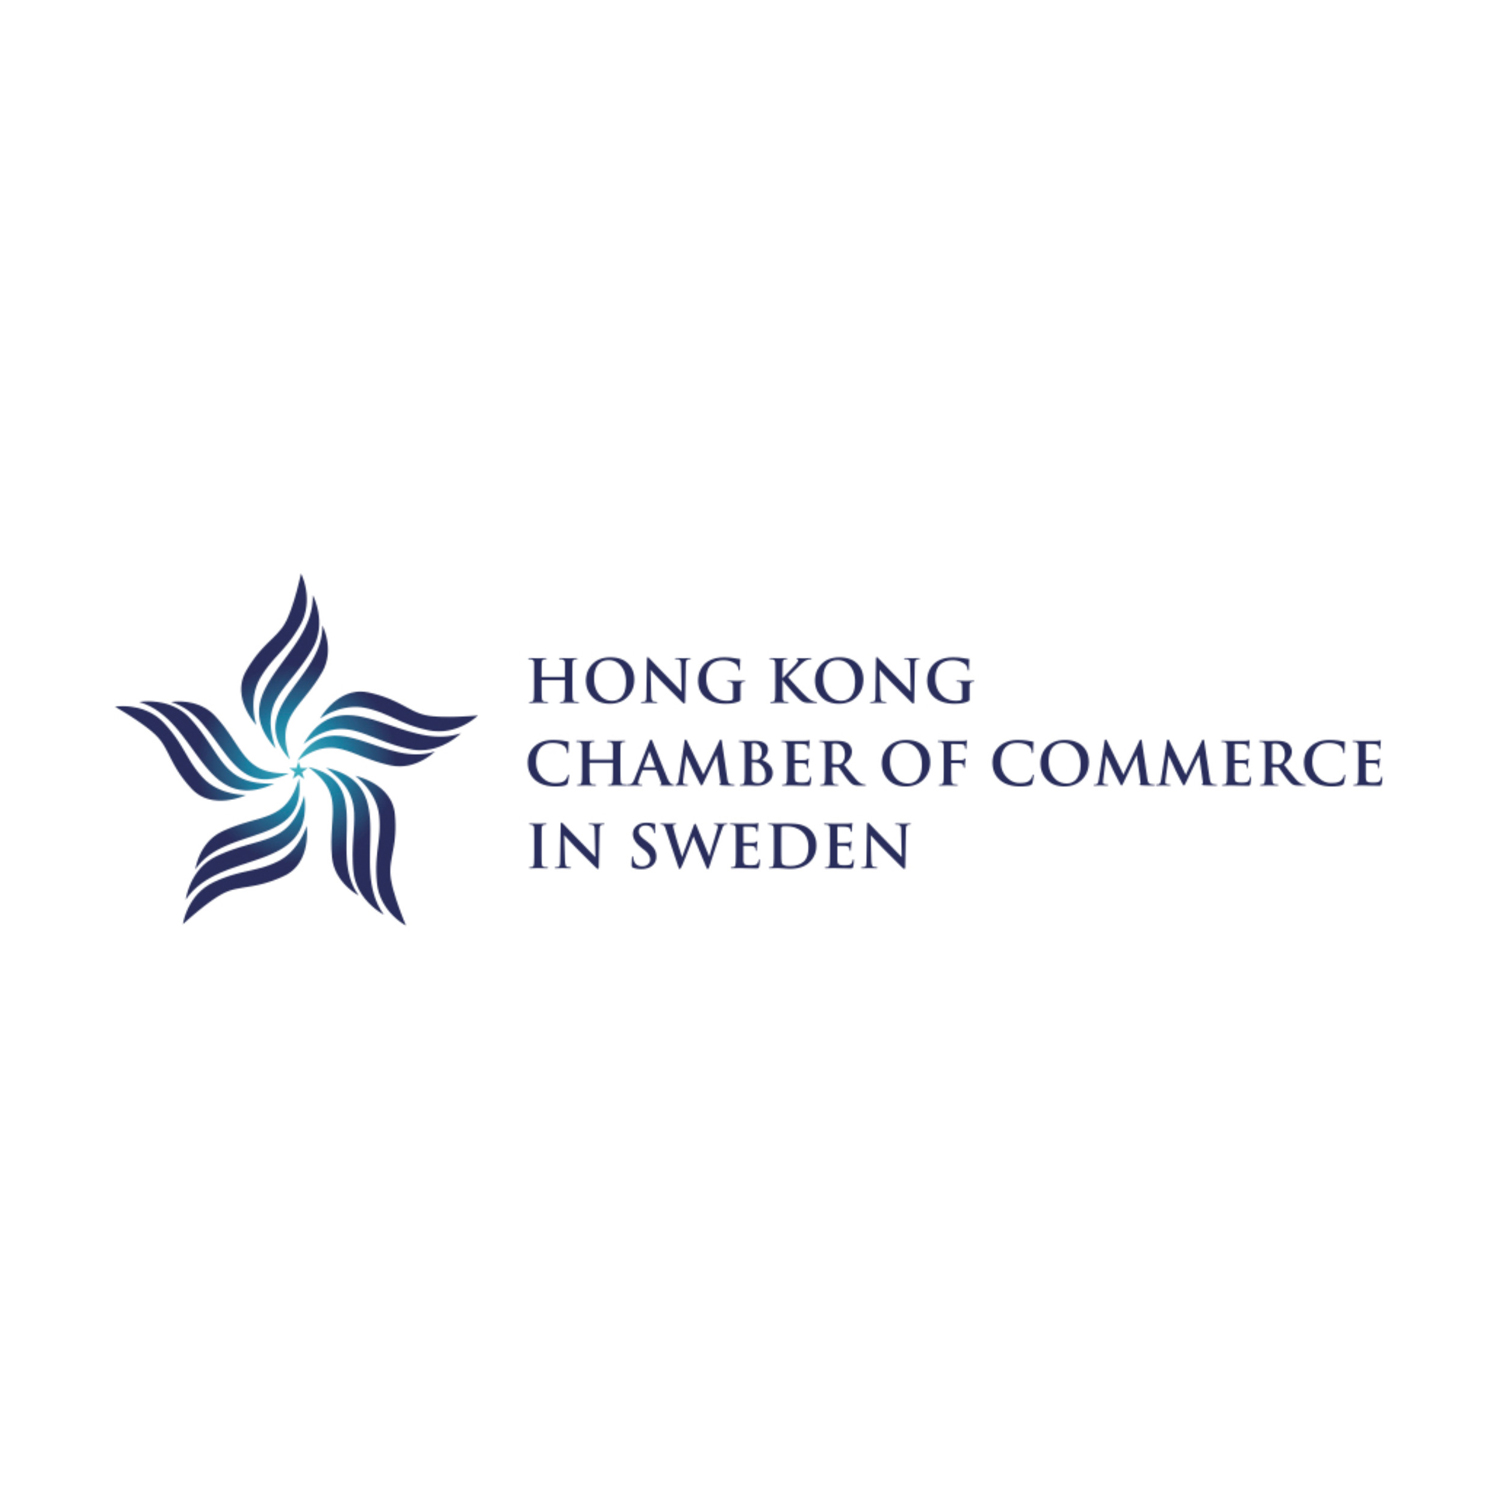 Hong Kong Chamber of Commerce in Sweden